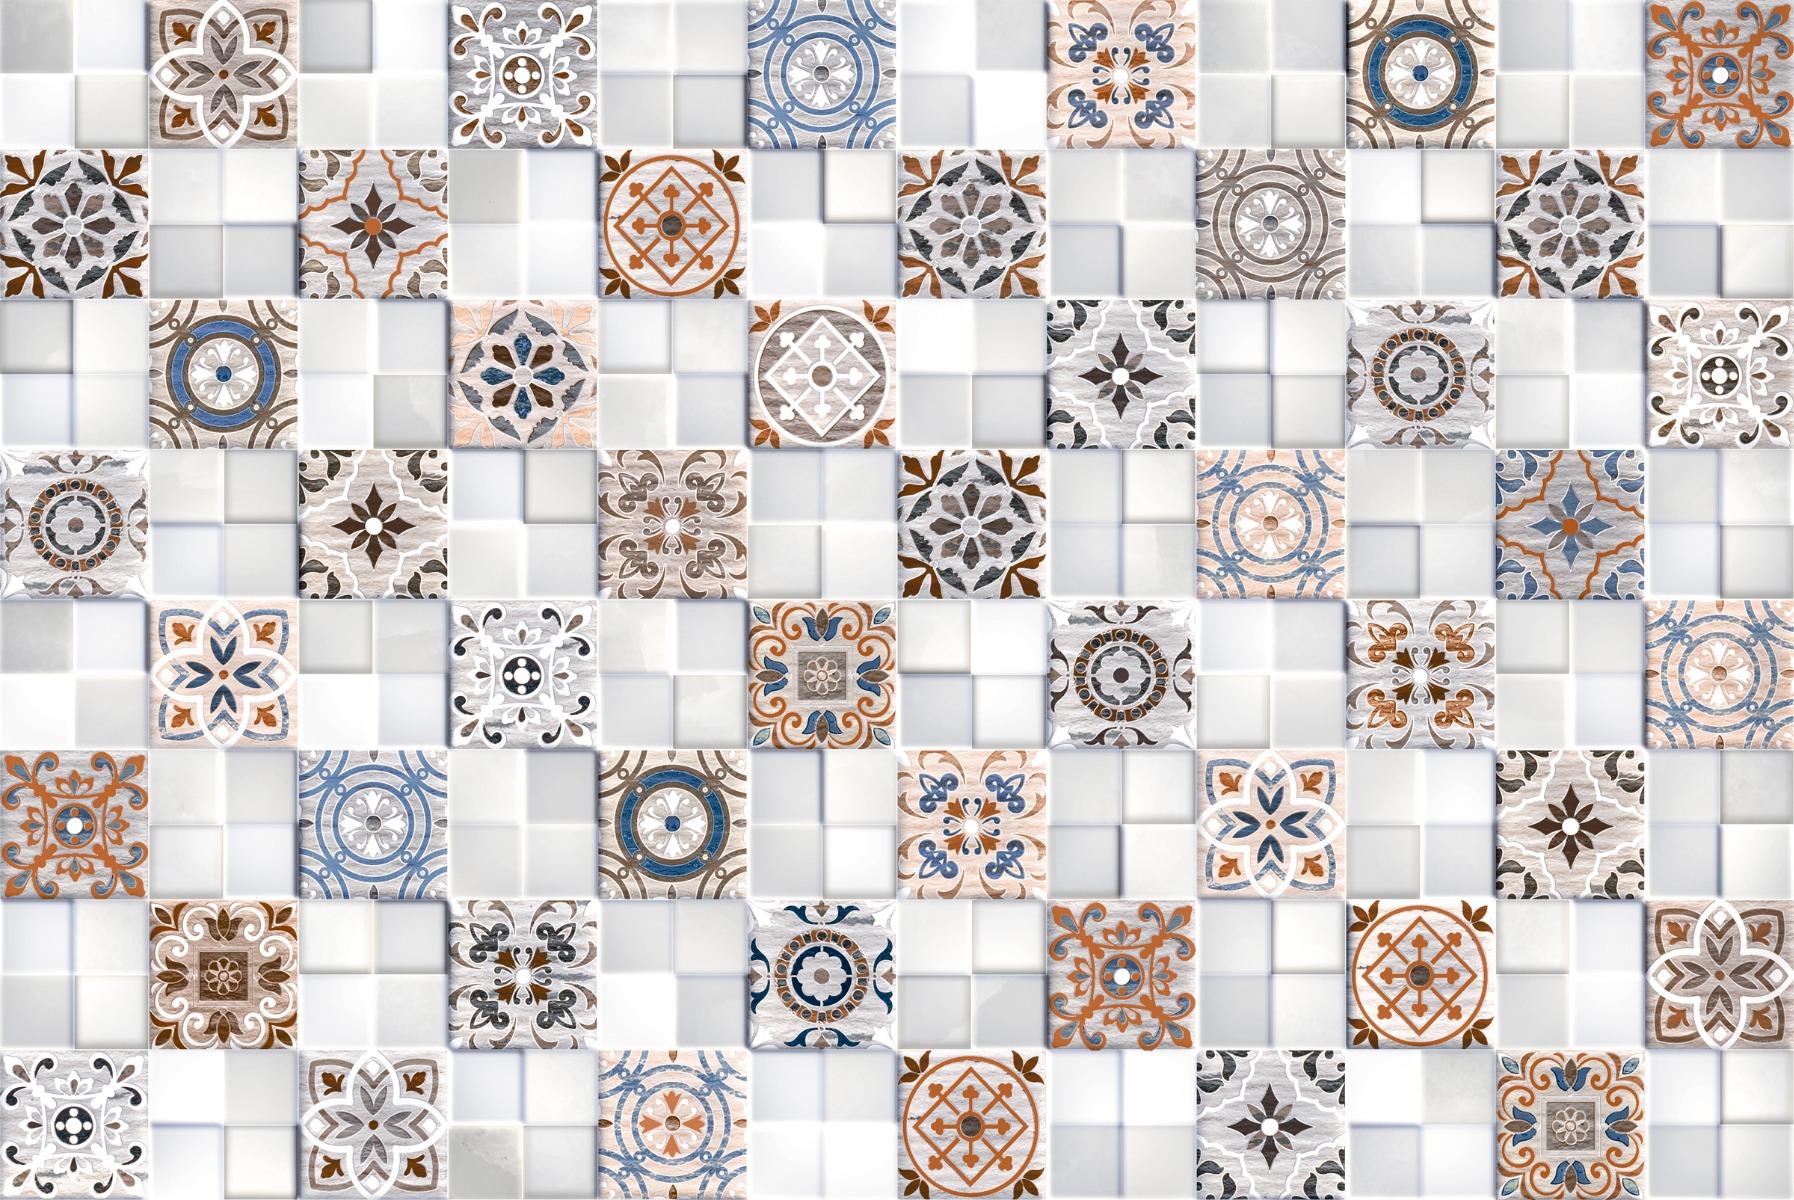 Glass Mosaic Tiles for Bathroom Tiles, Kitchen Tiles, Accent Tiles, Dining Room Tiles